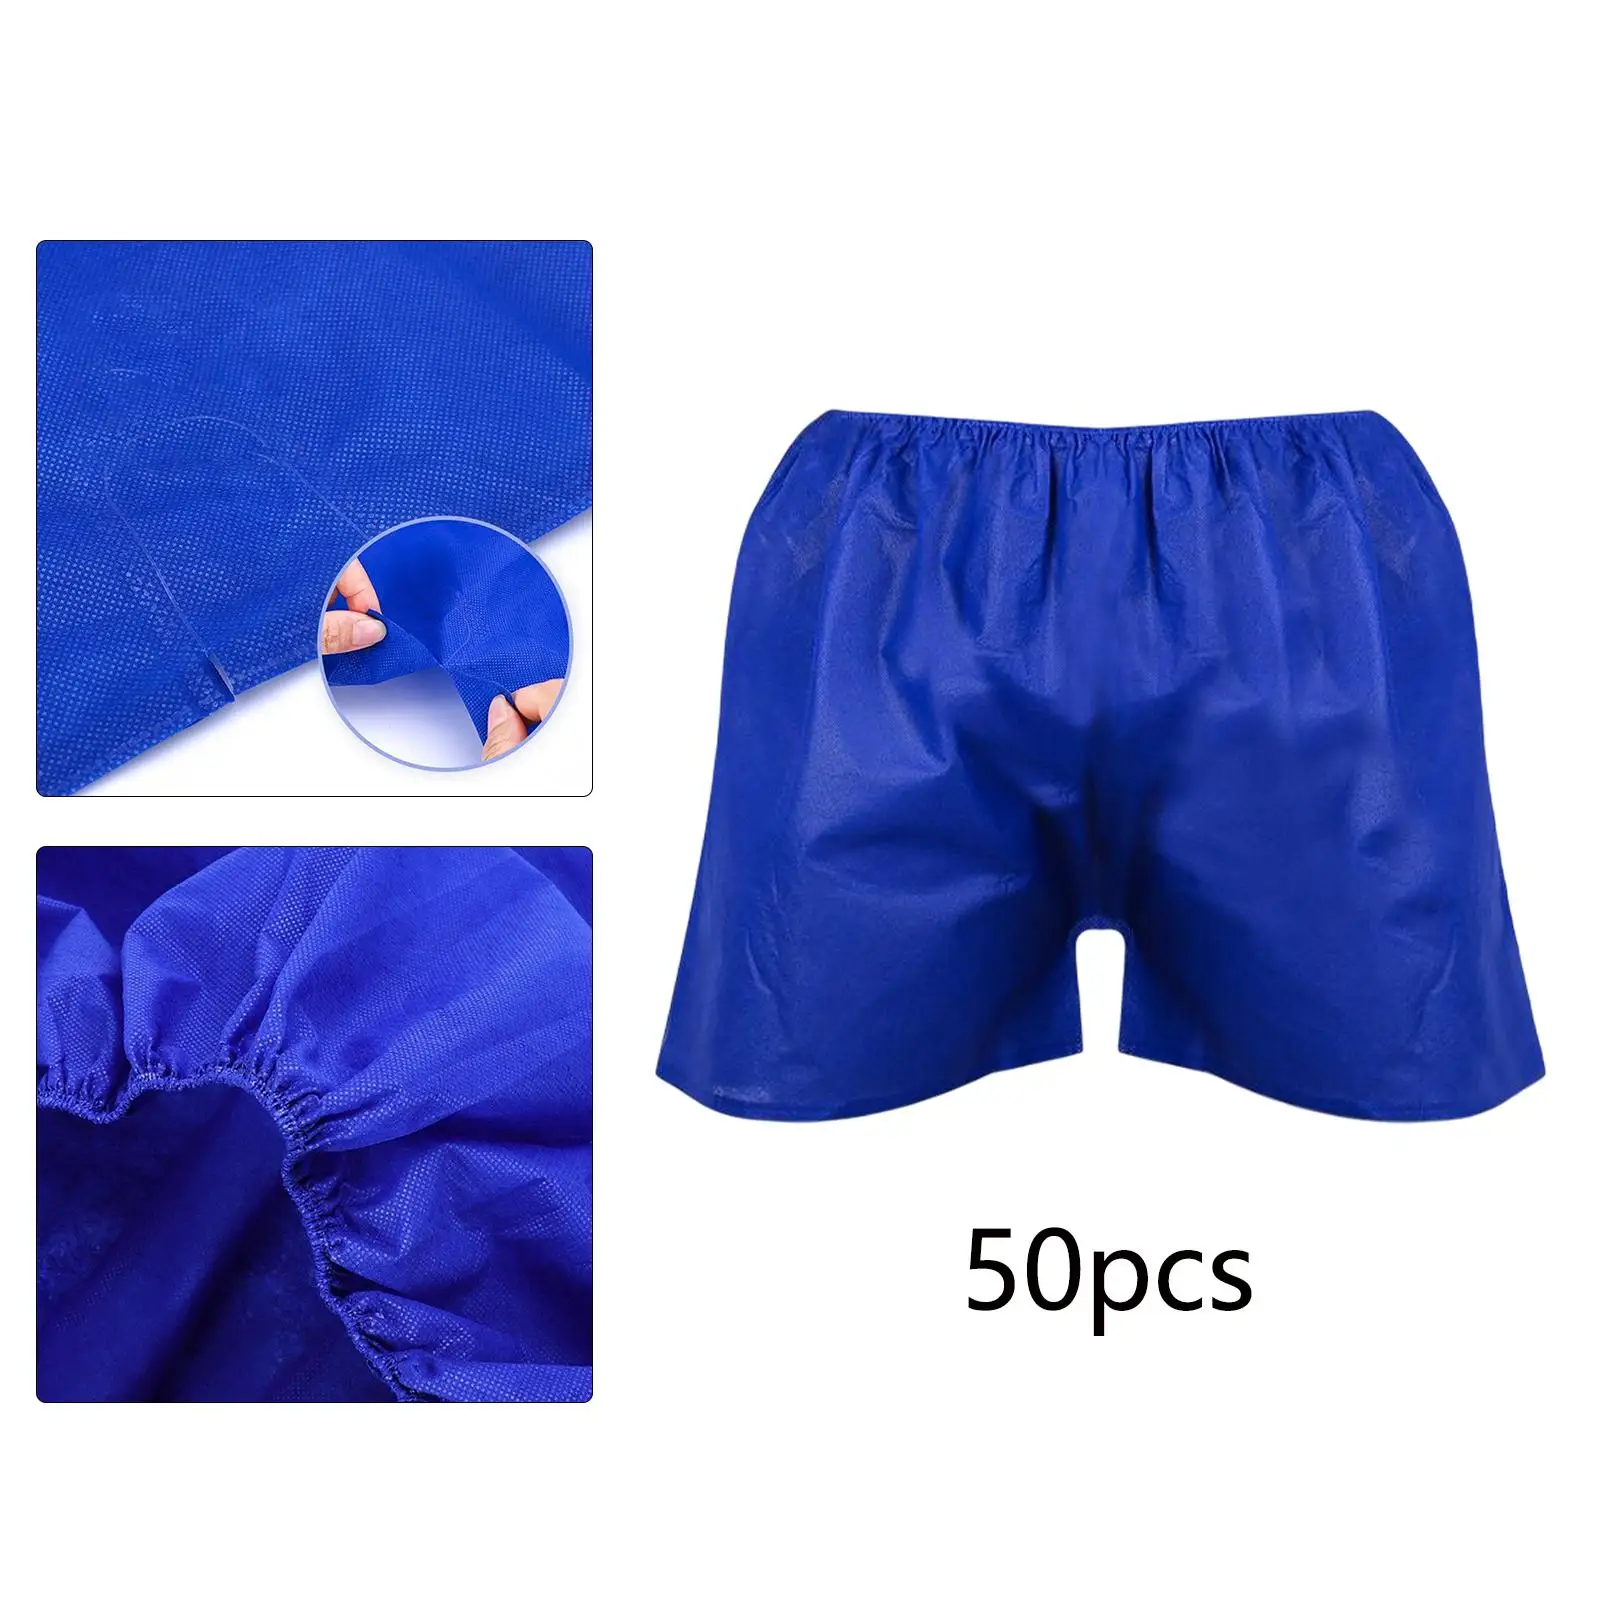 Men`s men Shorts Panties Underwear for Travel Tanning Steaming